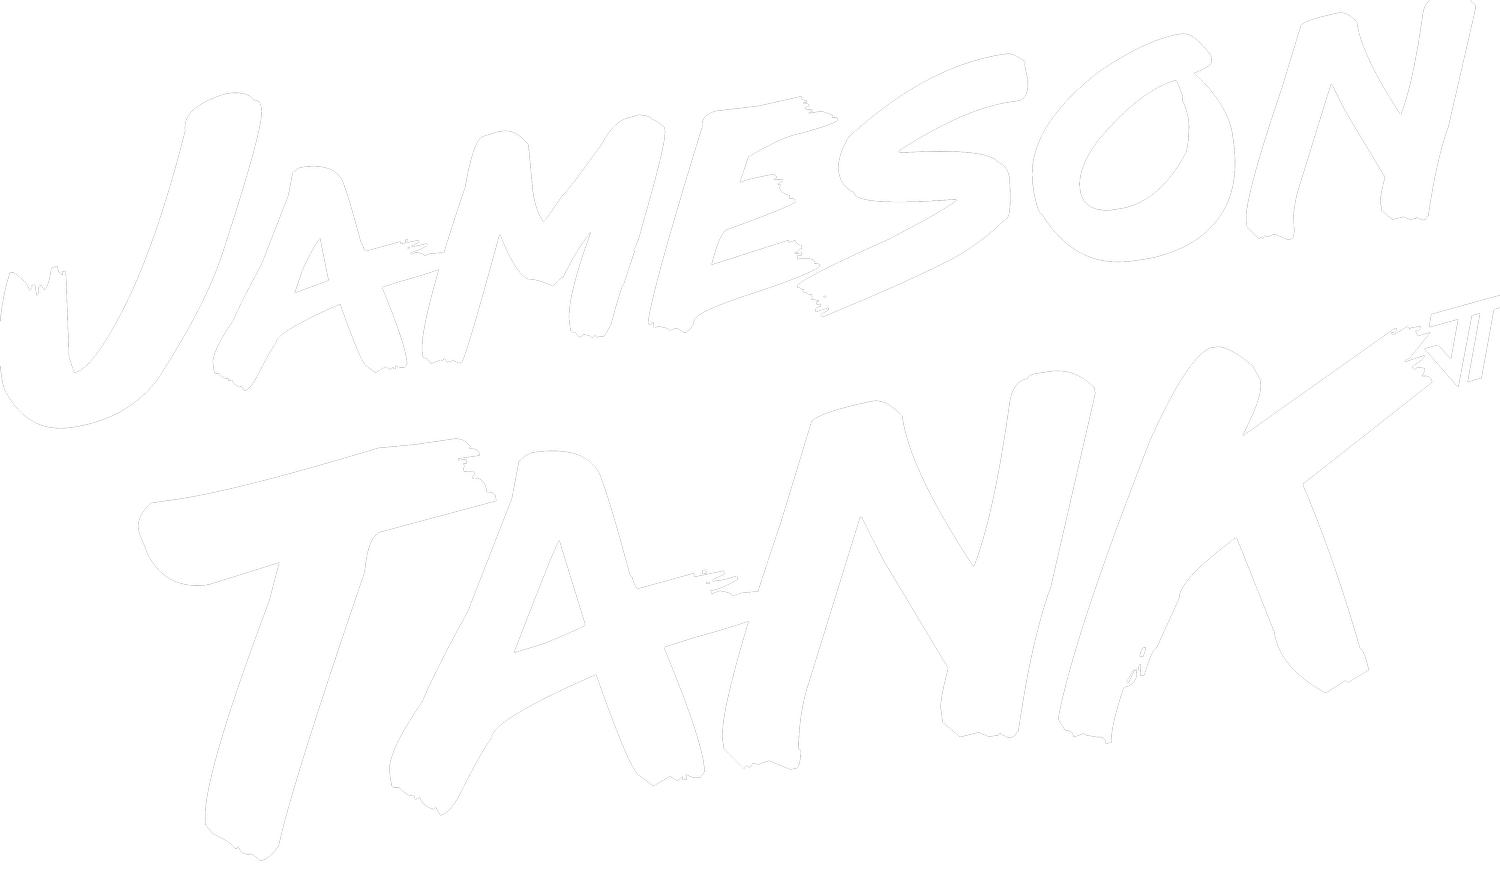 JAMESON TANK 